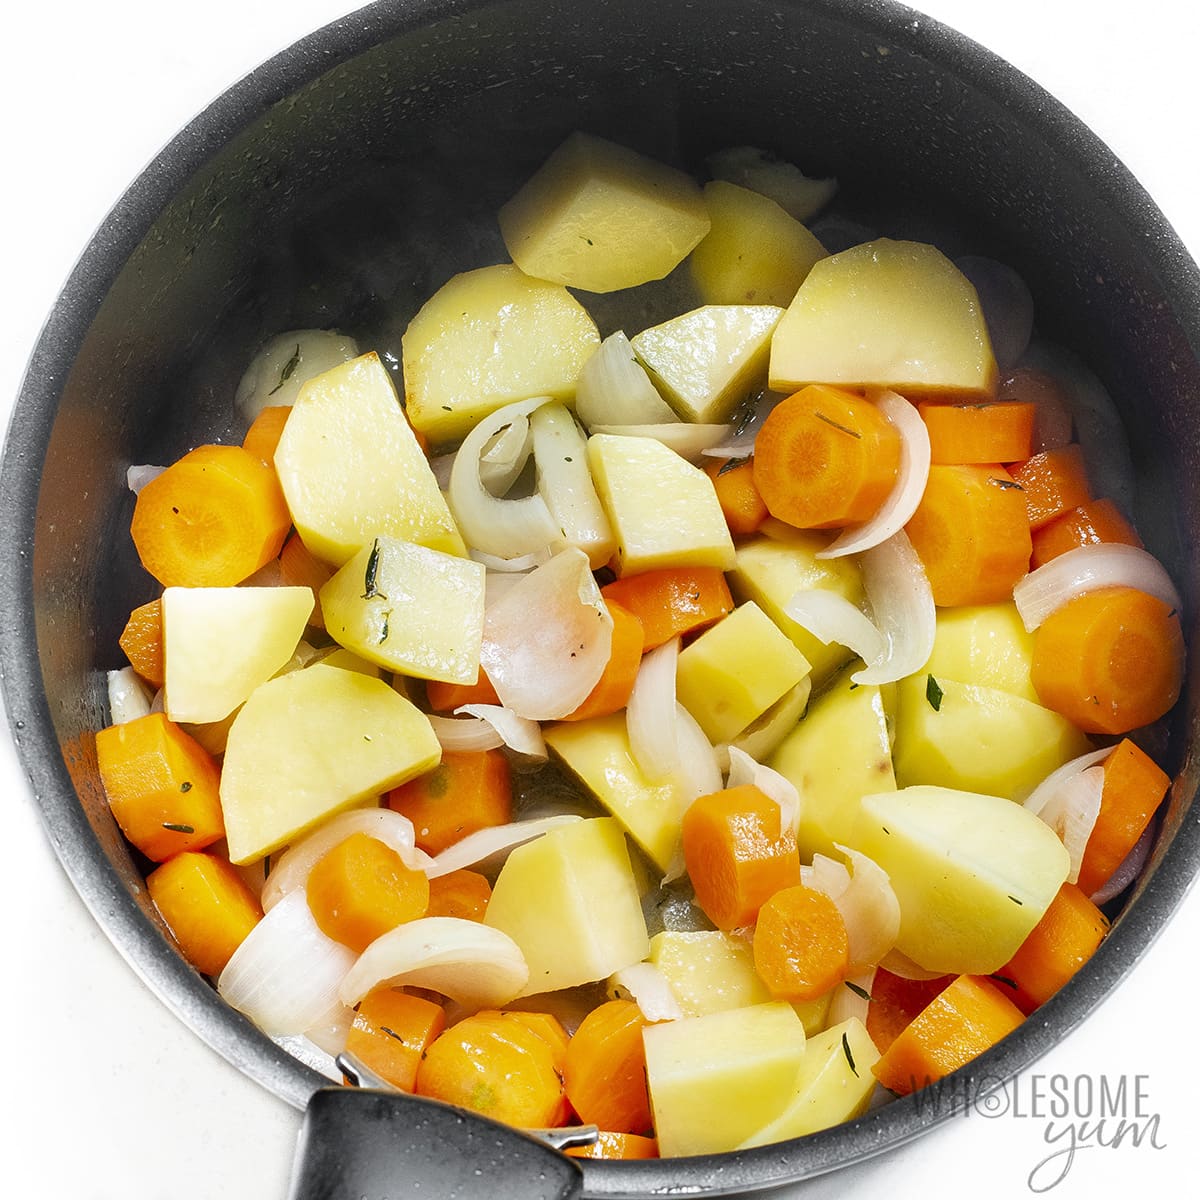 Vegetables cooking in pot.